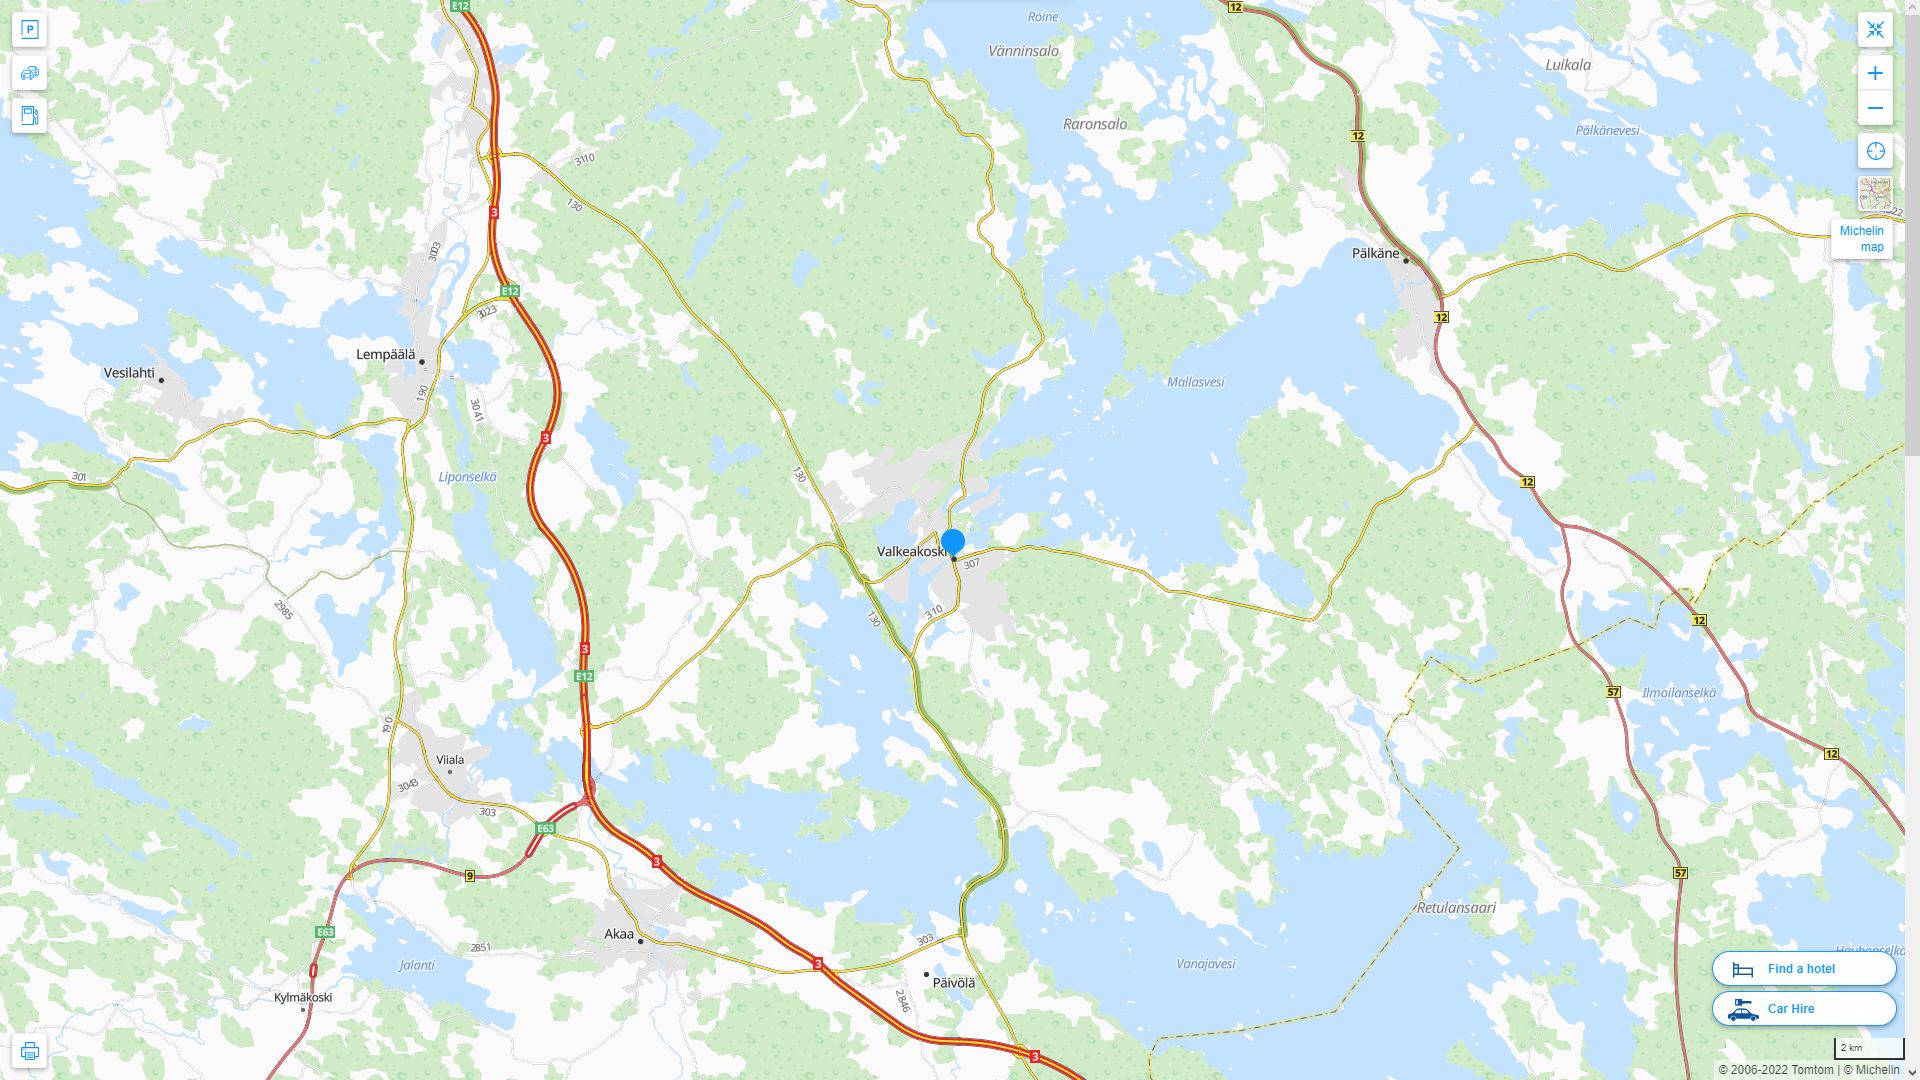 Valkeakoski Finlande Autoroute et carte routiere